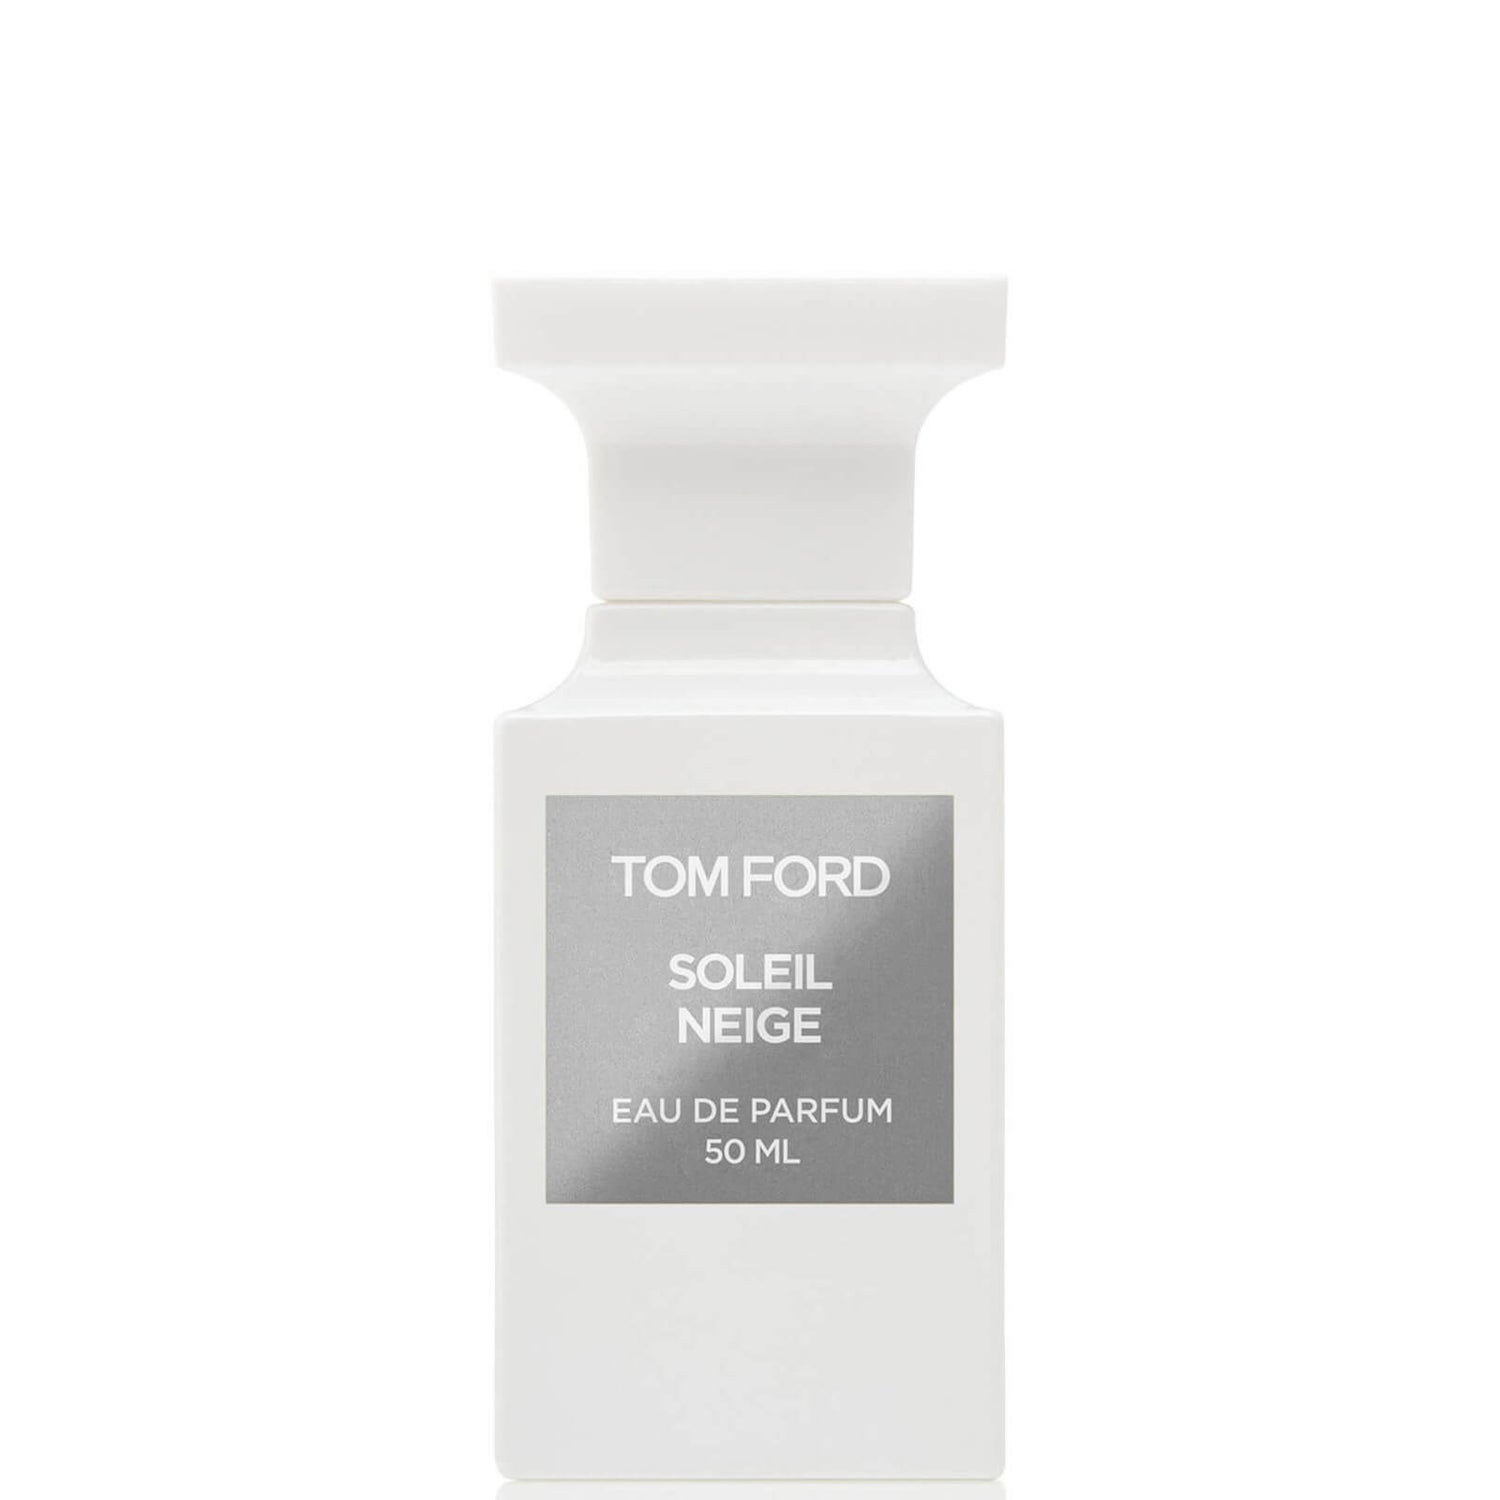 Tom Ford Soleil Neige Eau de Parfum Spray - 50ml